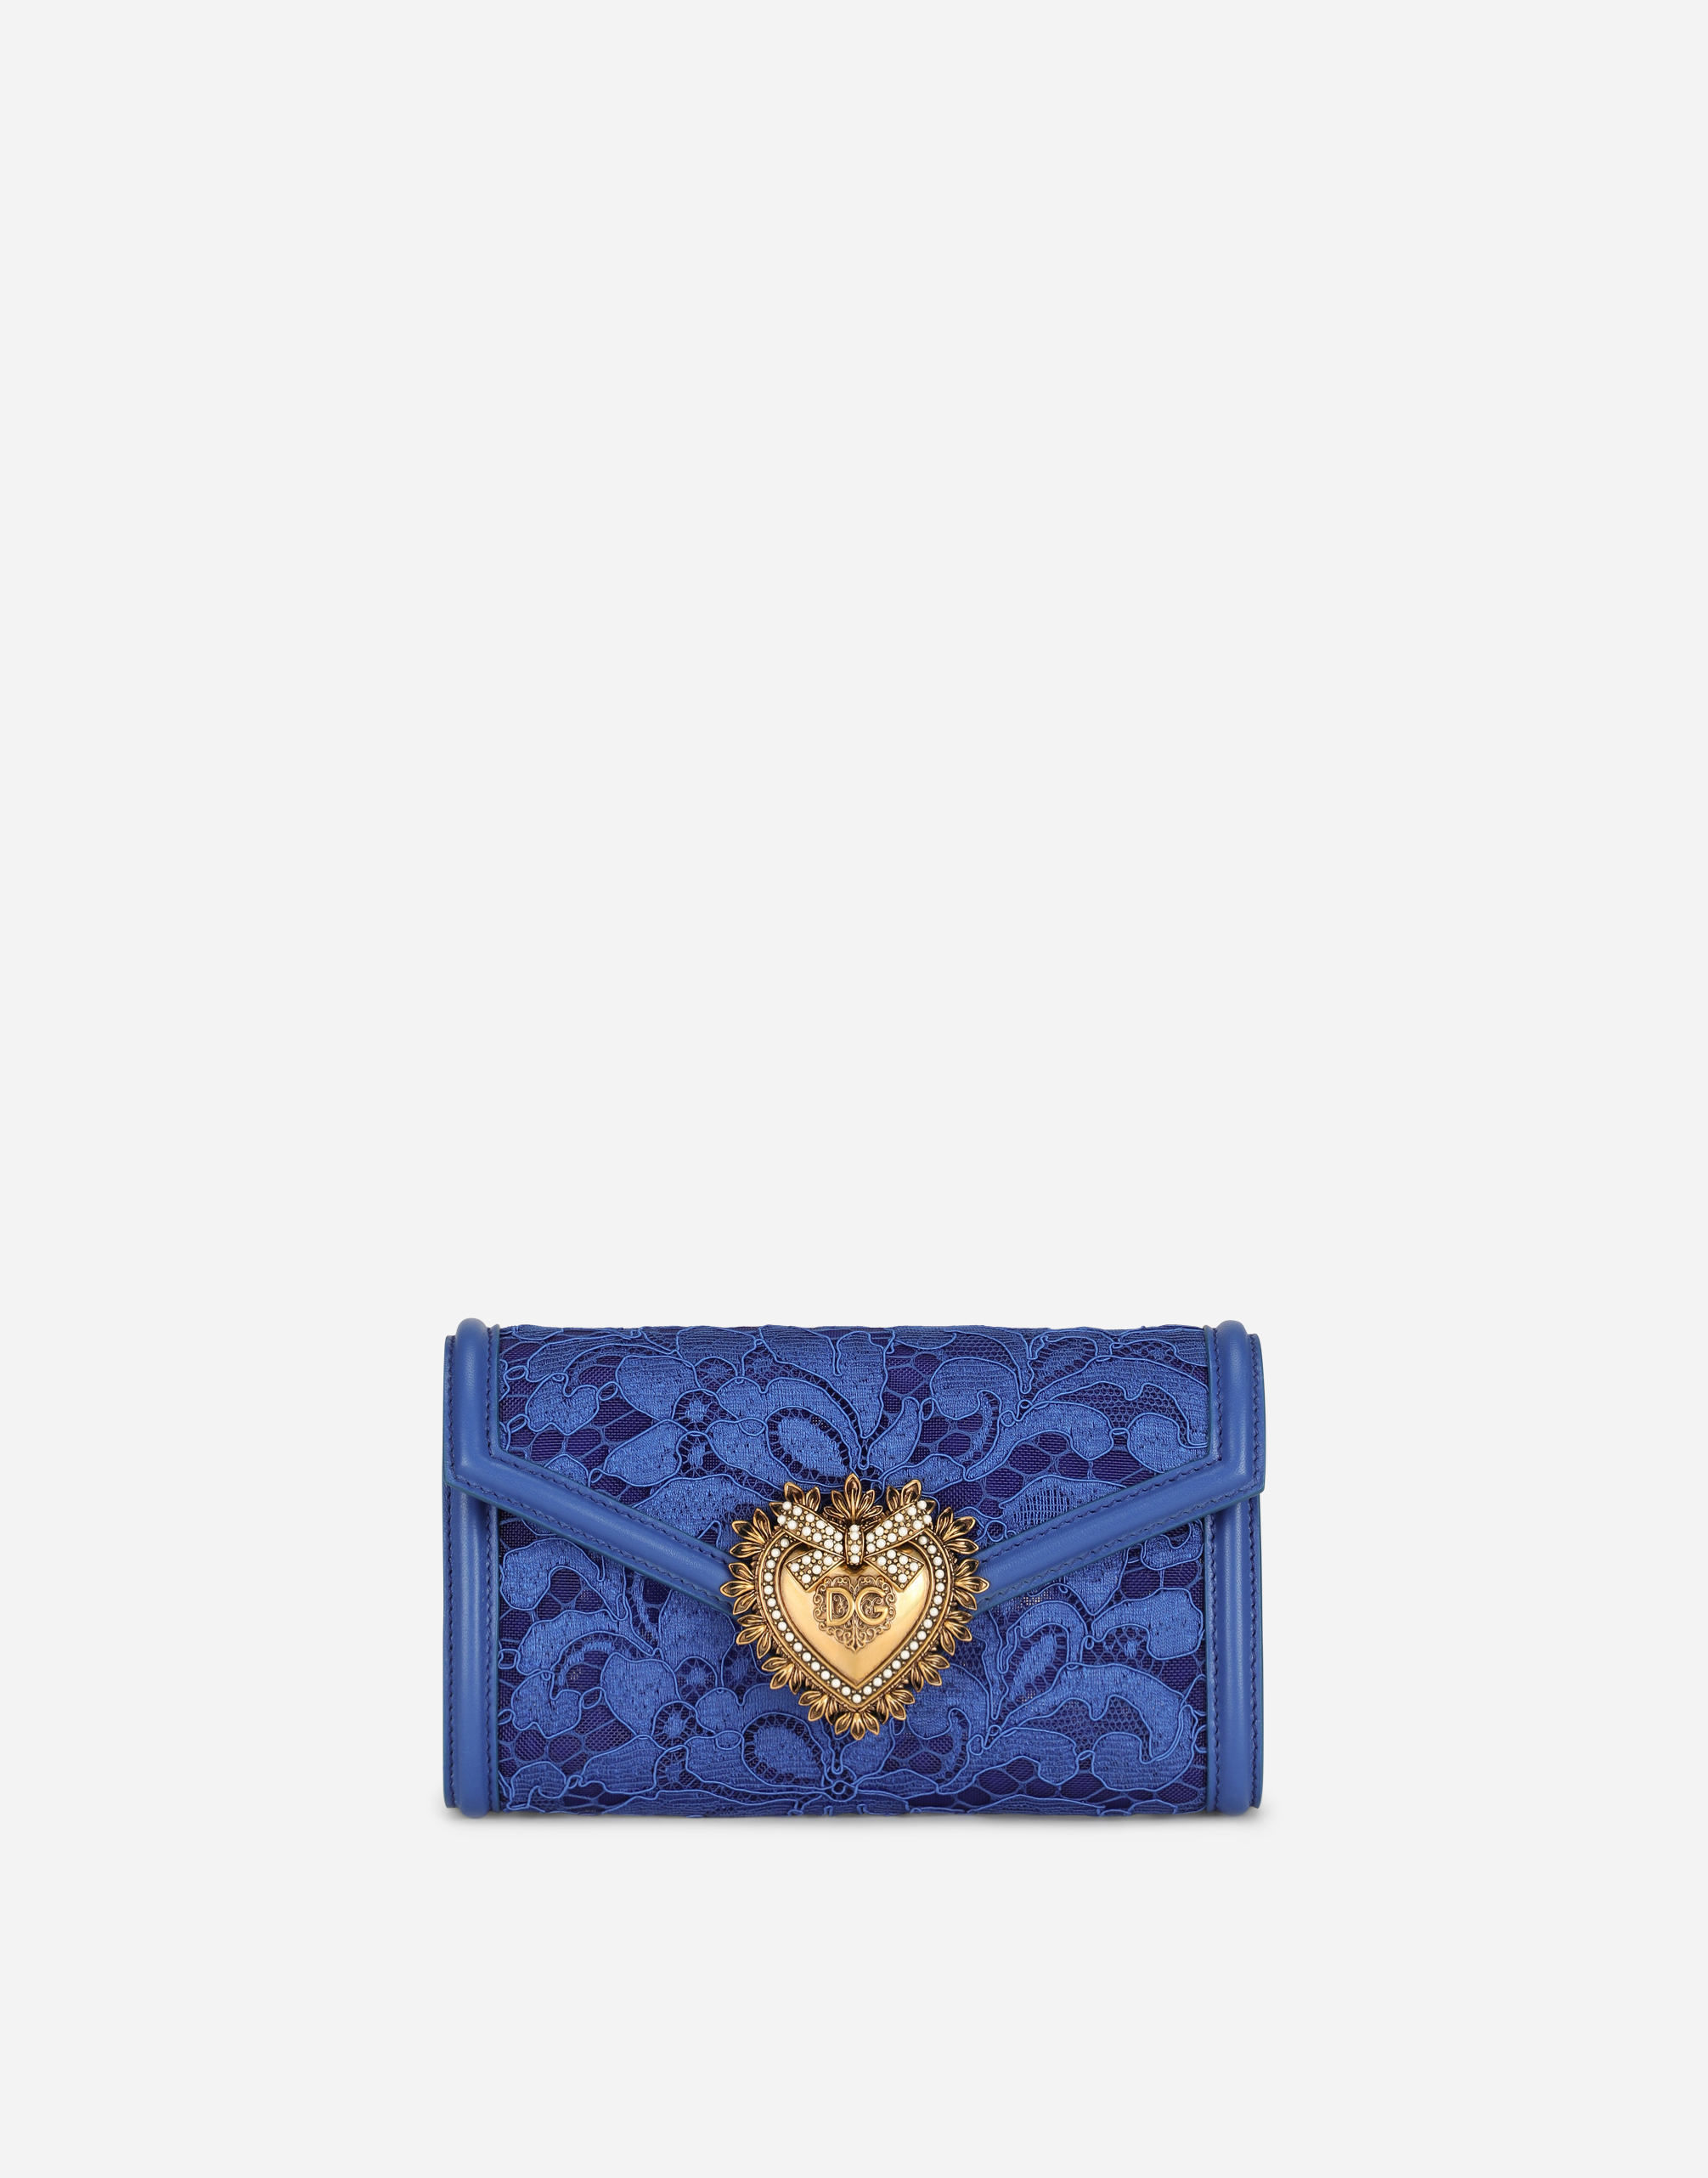 Lace Devotion mini bag in Blue